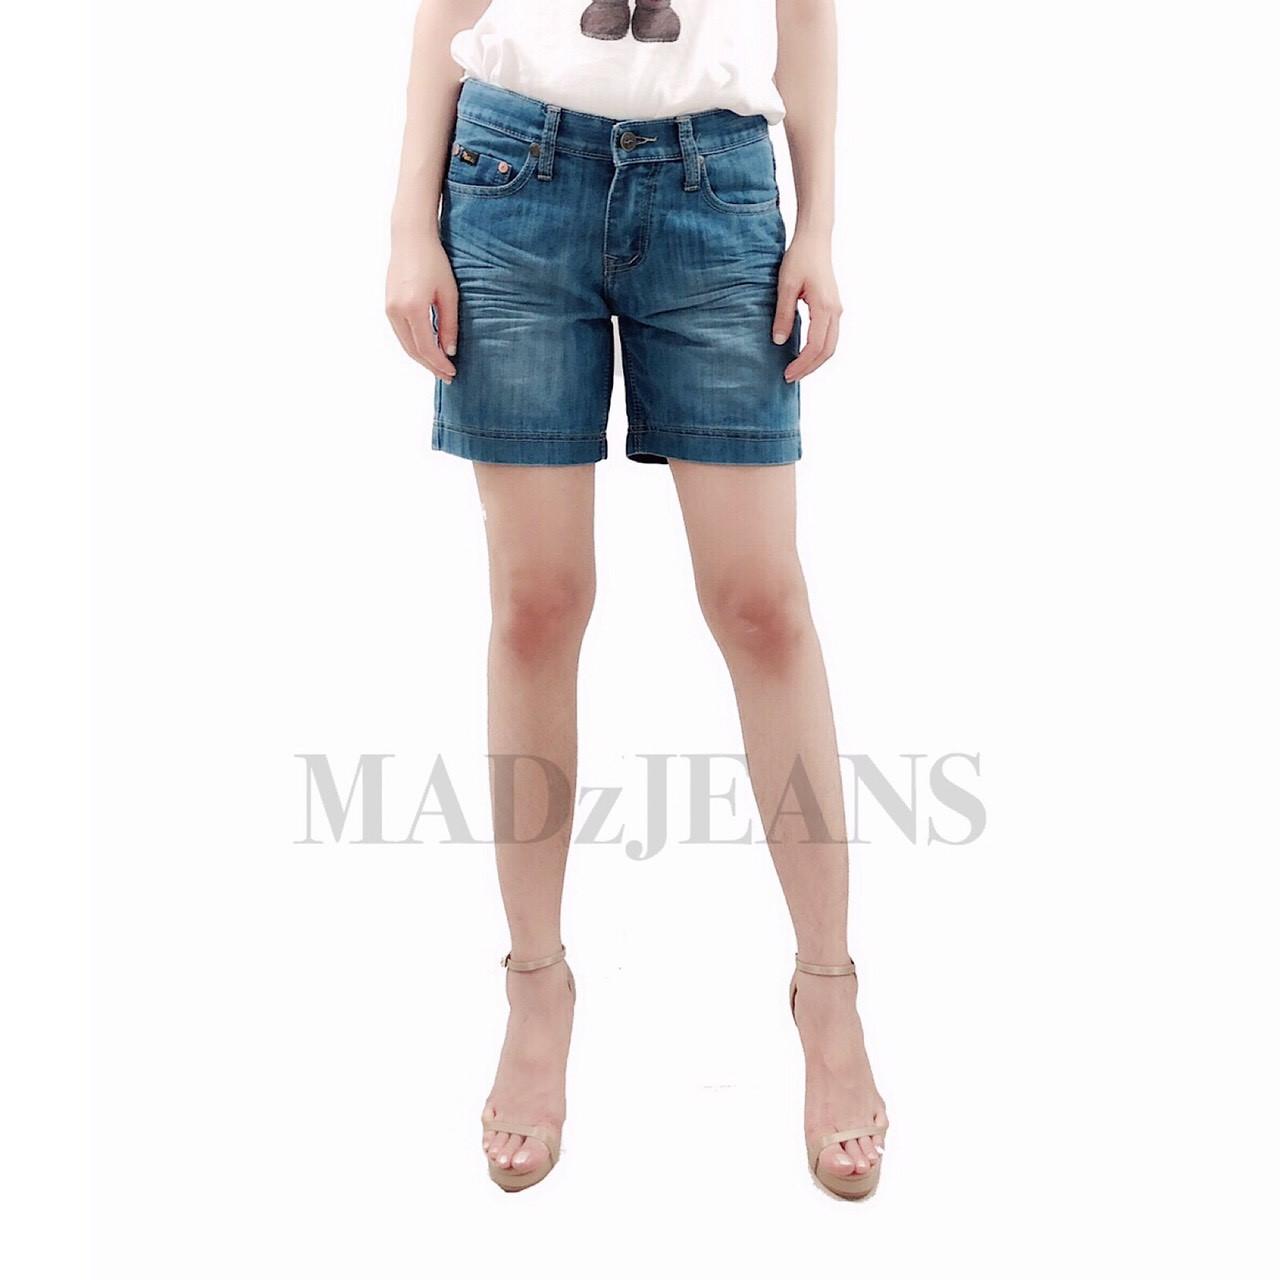 MADzJeans Nobaby LightBlueShorts กางเกงยีนส์ขาสั้นหญิงสองส่วน สีบลูฟอก ทรงสวยปักแถบขาว งานเนียน ทรงสวย ตัดเย็บอย่างดี Size S M L XL XXL XXXL